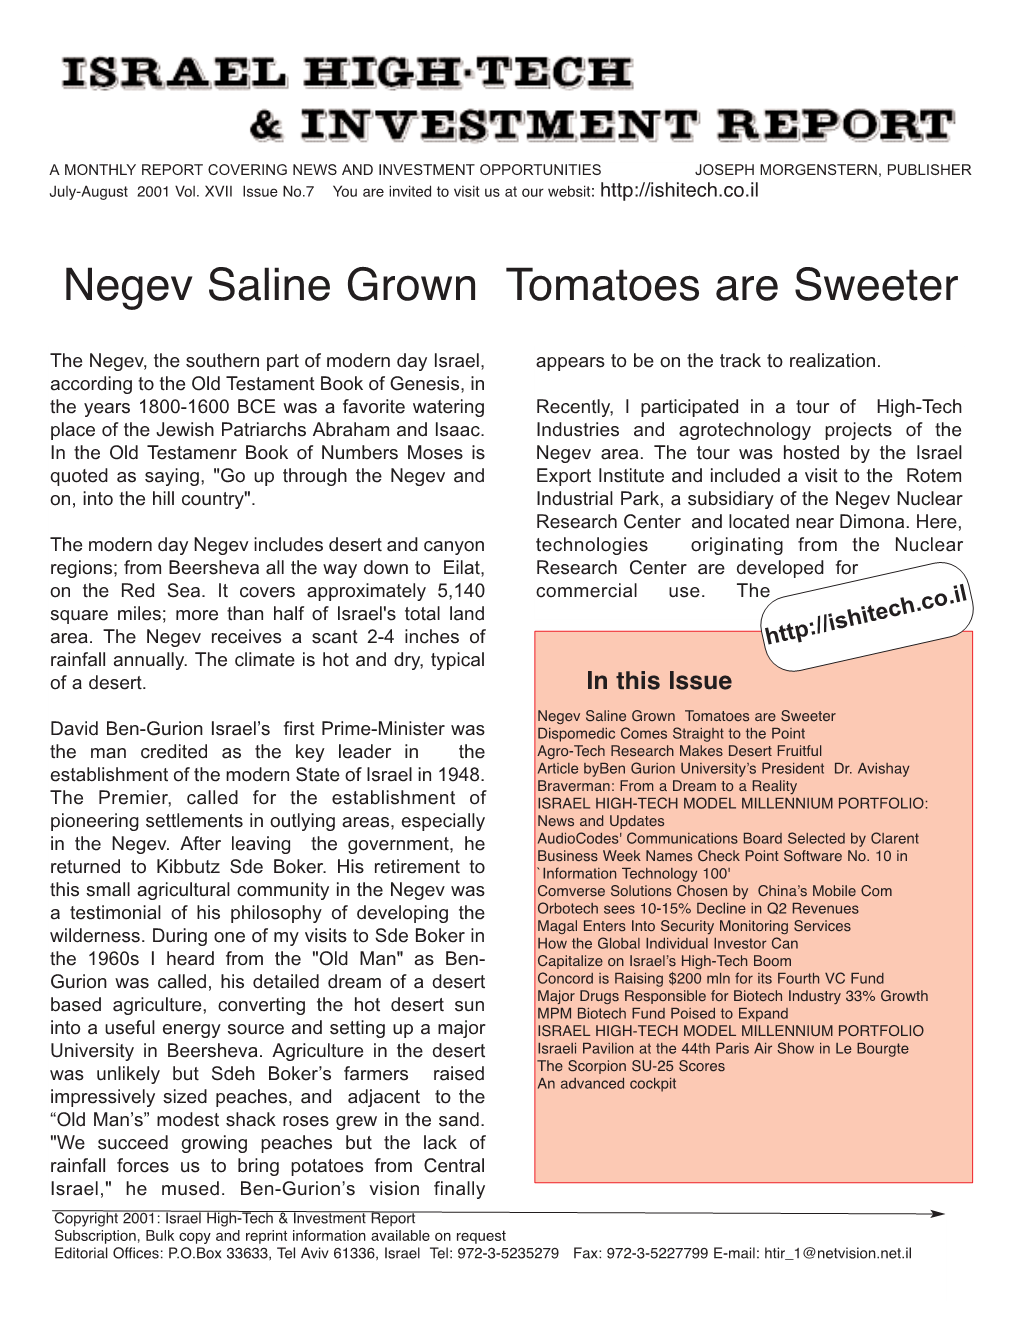 Negev Saline Grown Tomatoes Are Sweeter